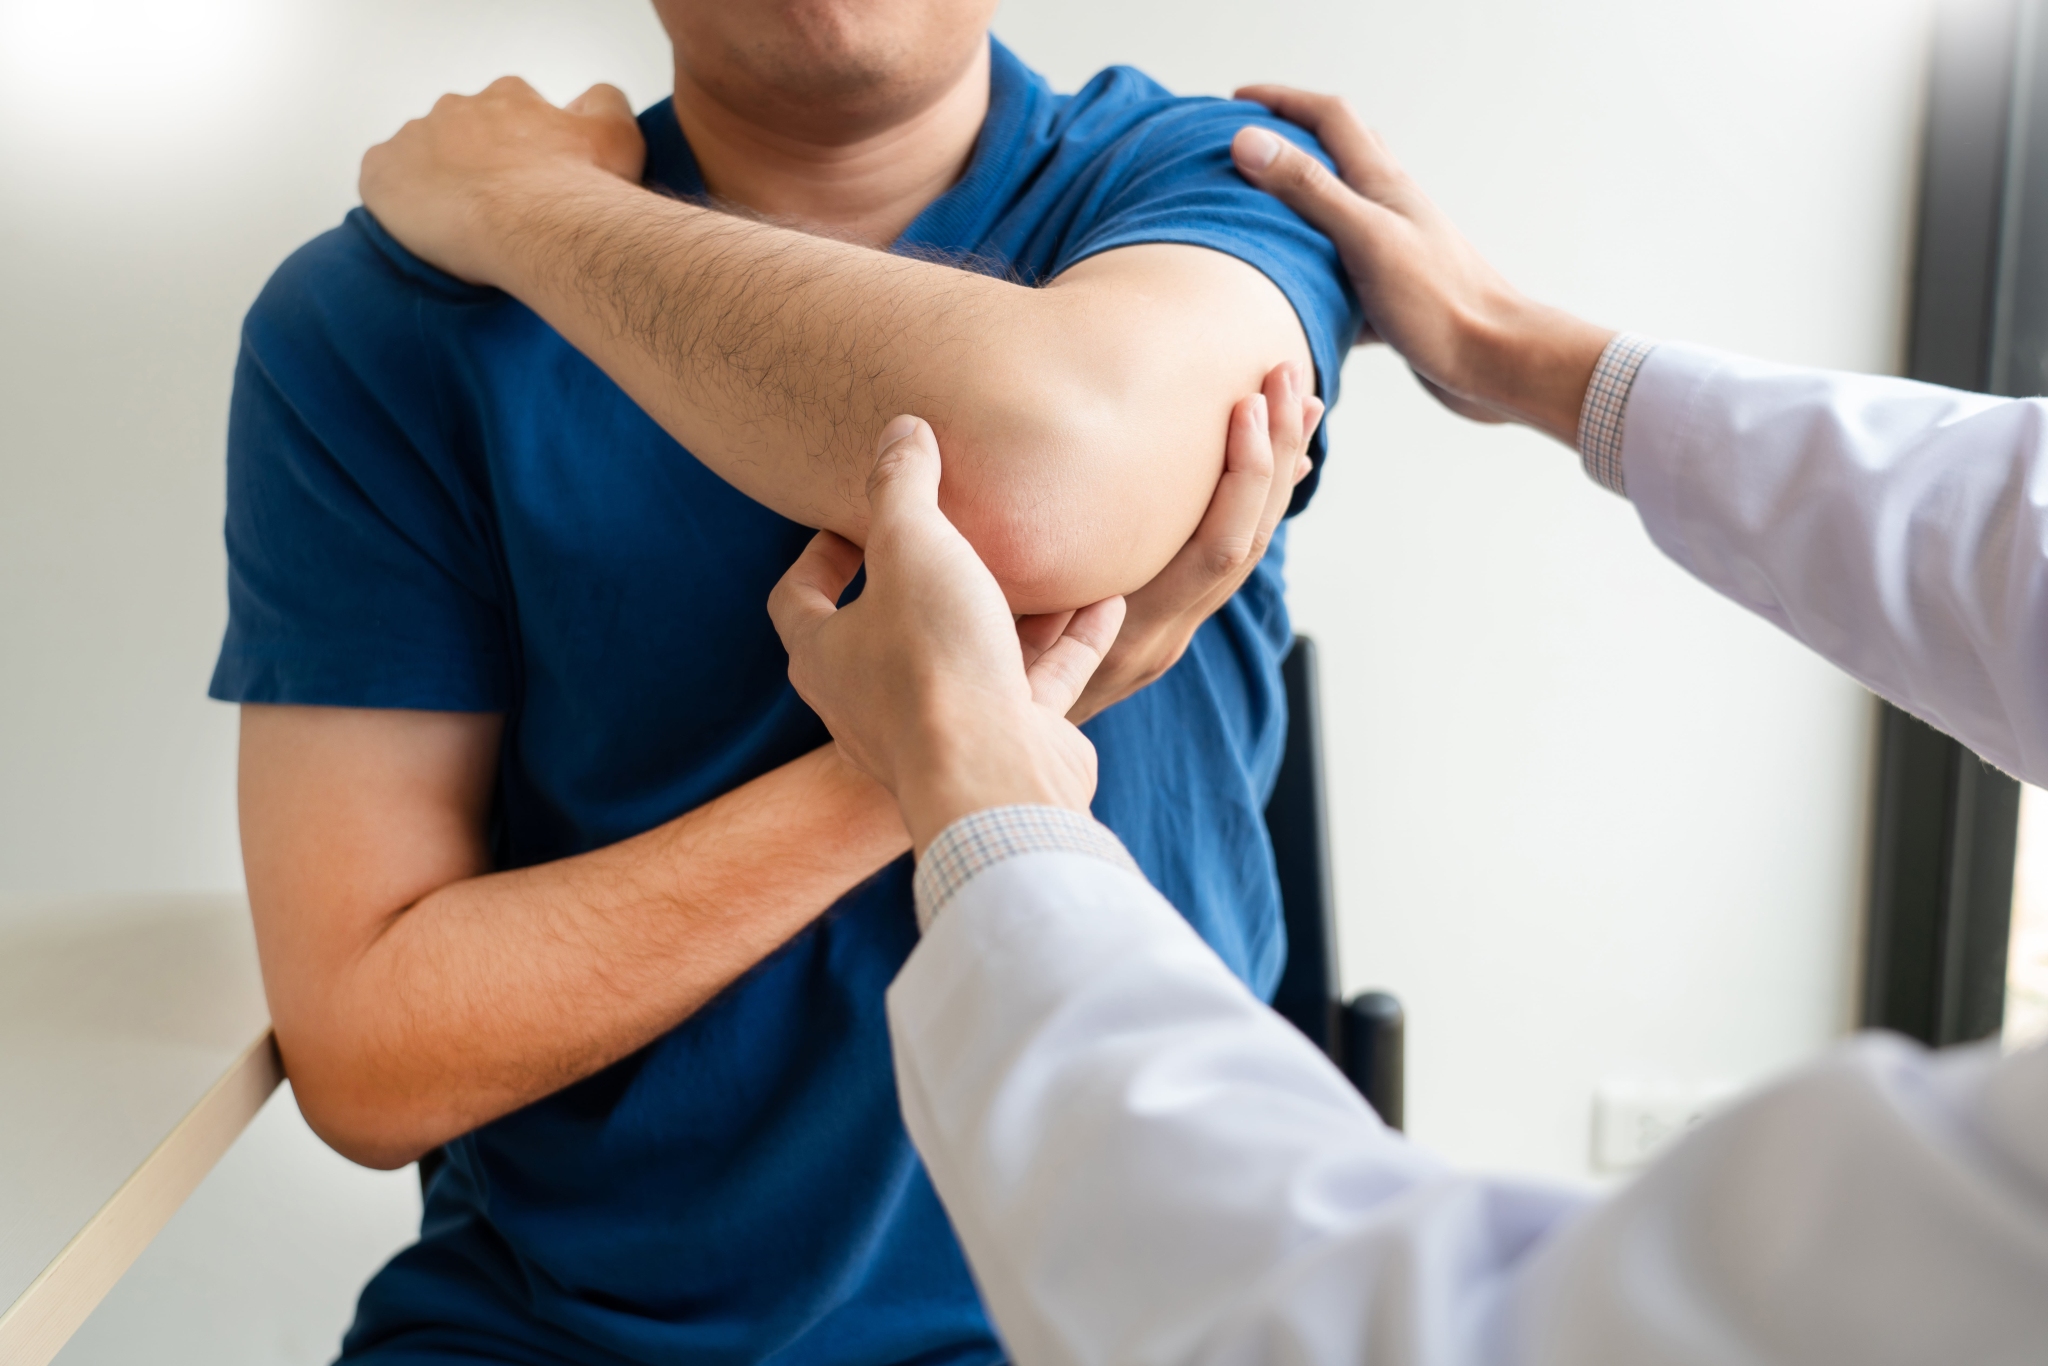 shoulder injury physical examination